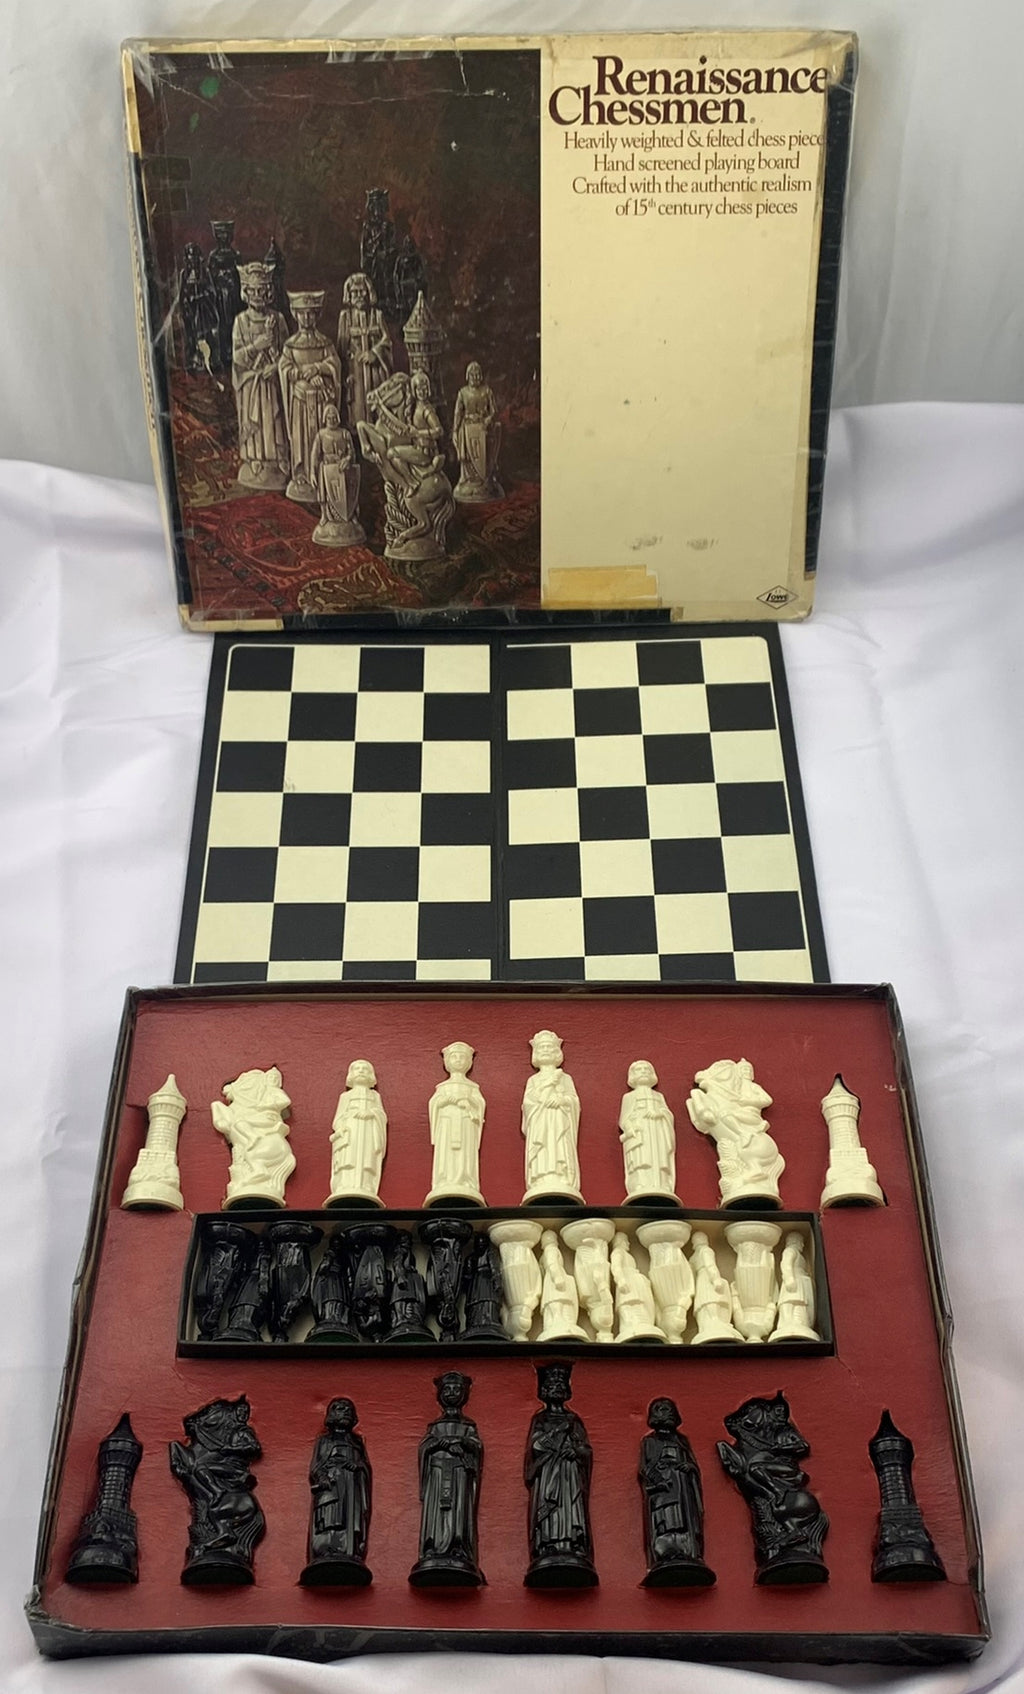 Renaissance Chessmen Chess Set - 1970 - E.S. Lowe - Very Good Condition